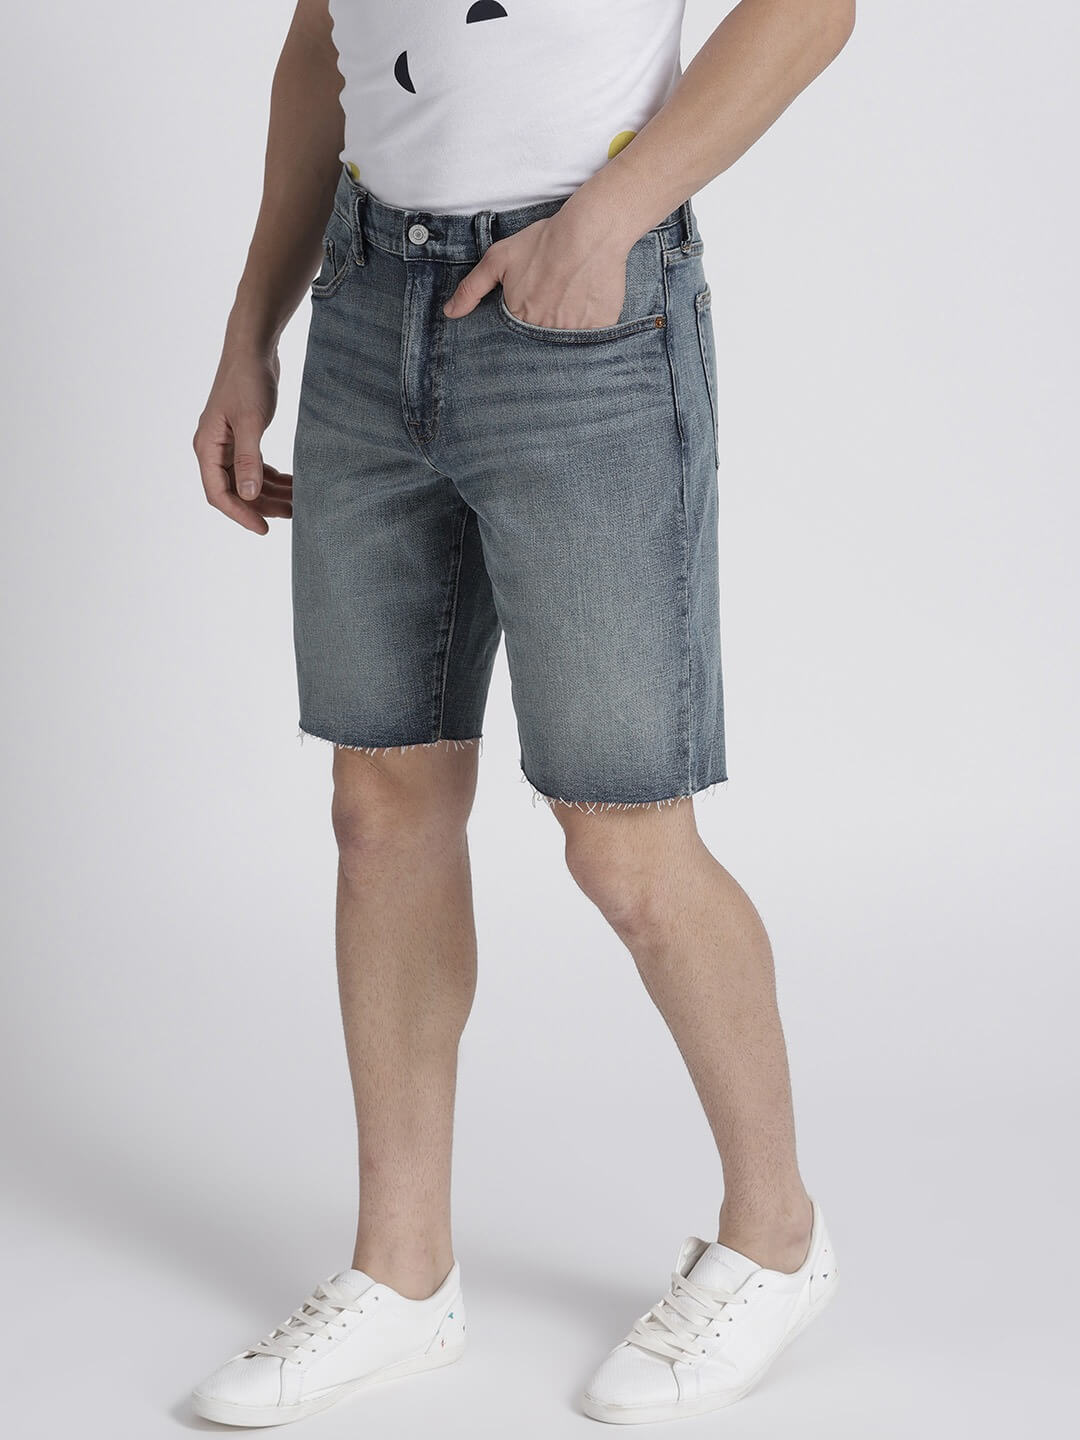 Men 10 Inches Slim Denim Shorts with Flex - Back View - AceCart